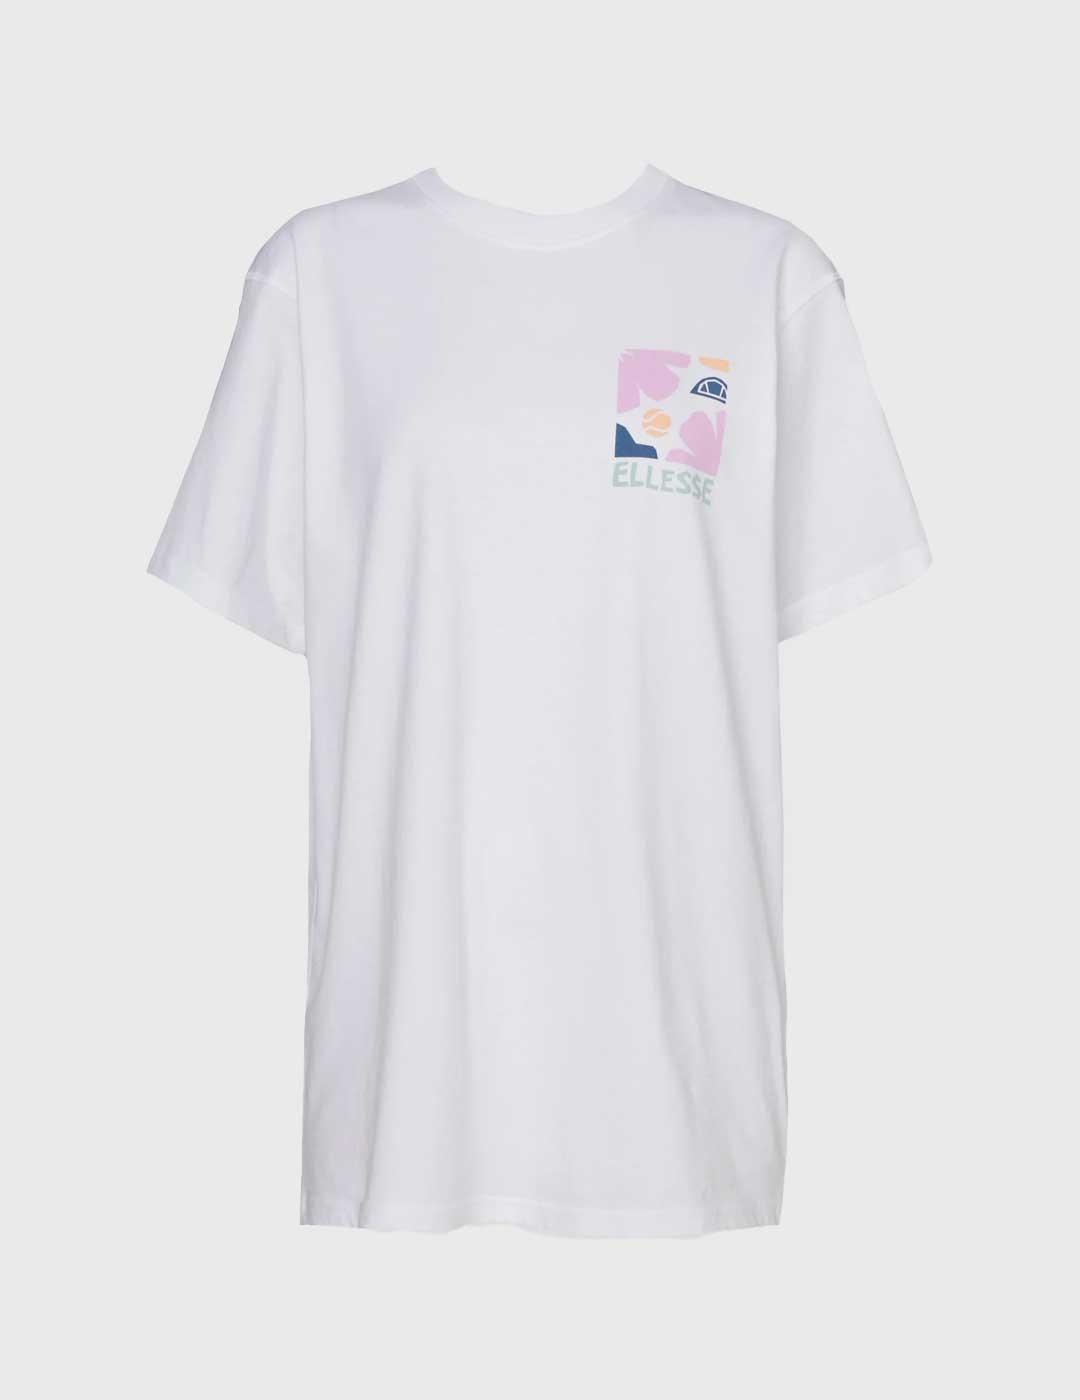 Eleesse Fortunata T-Shirt Camiseta blanca para mujer